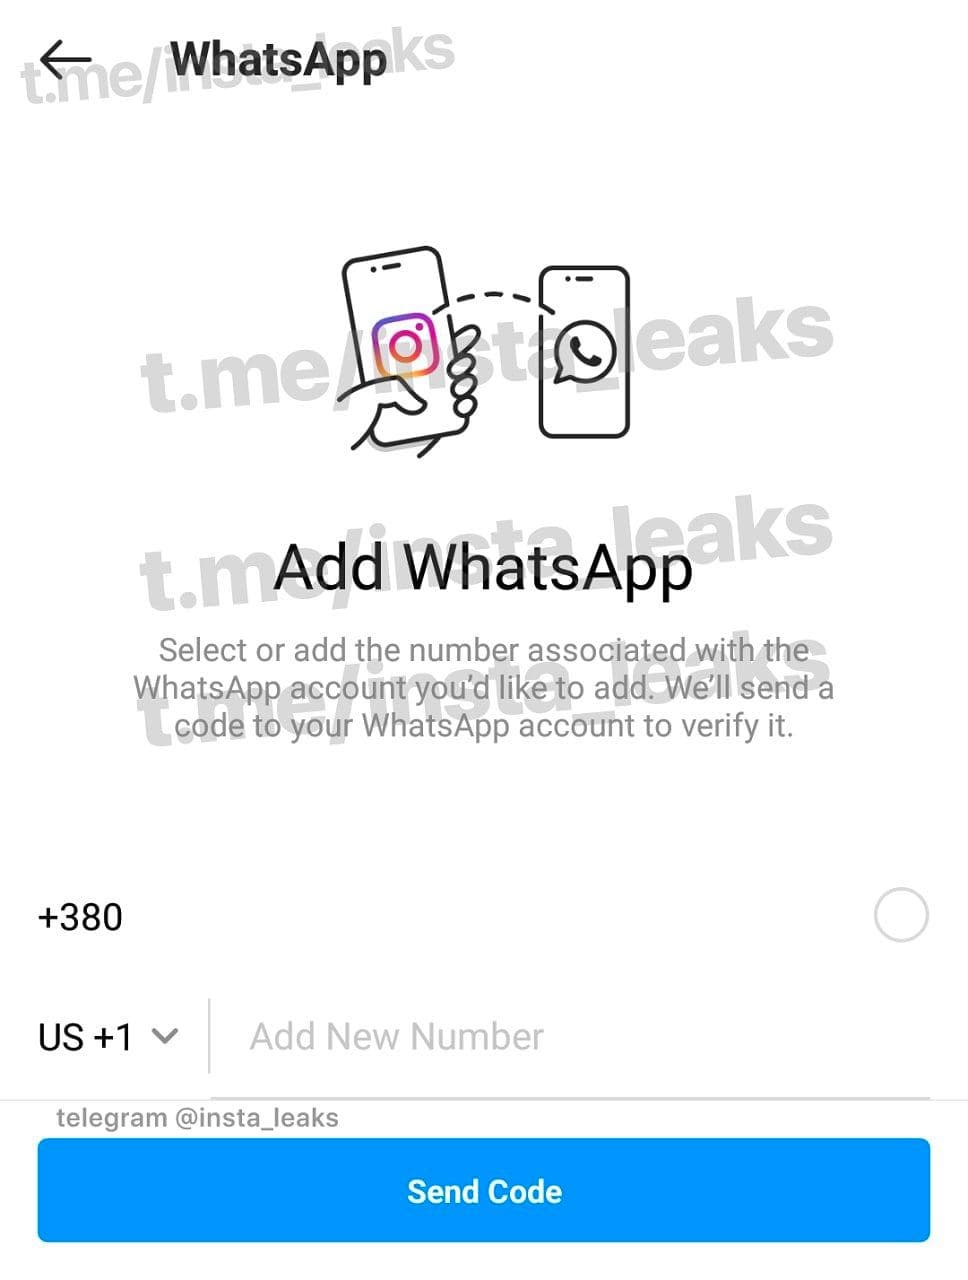 В Instagram скоро можно будет добавить ссылку на прямой диалог с WhatsApp, Soha, 25 мар 2021, 22:04, photo_2021-03-25_21-54-19 (2).jpg